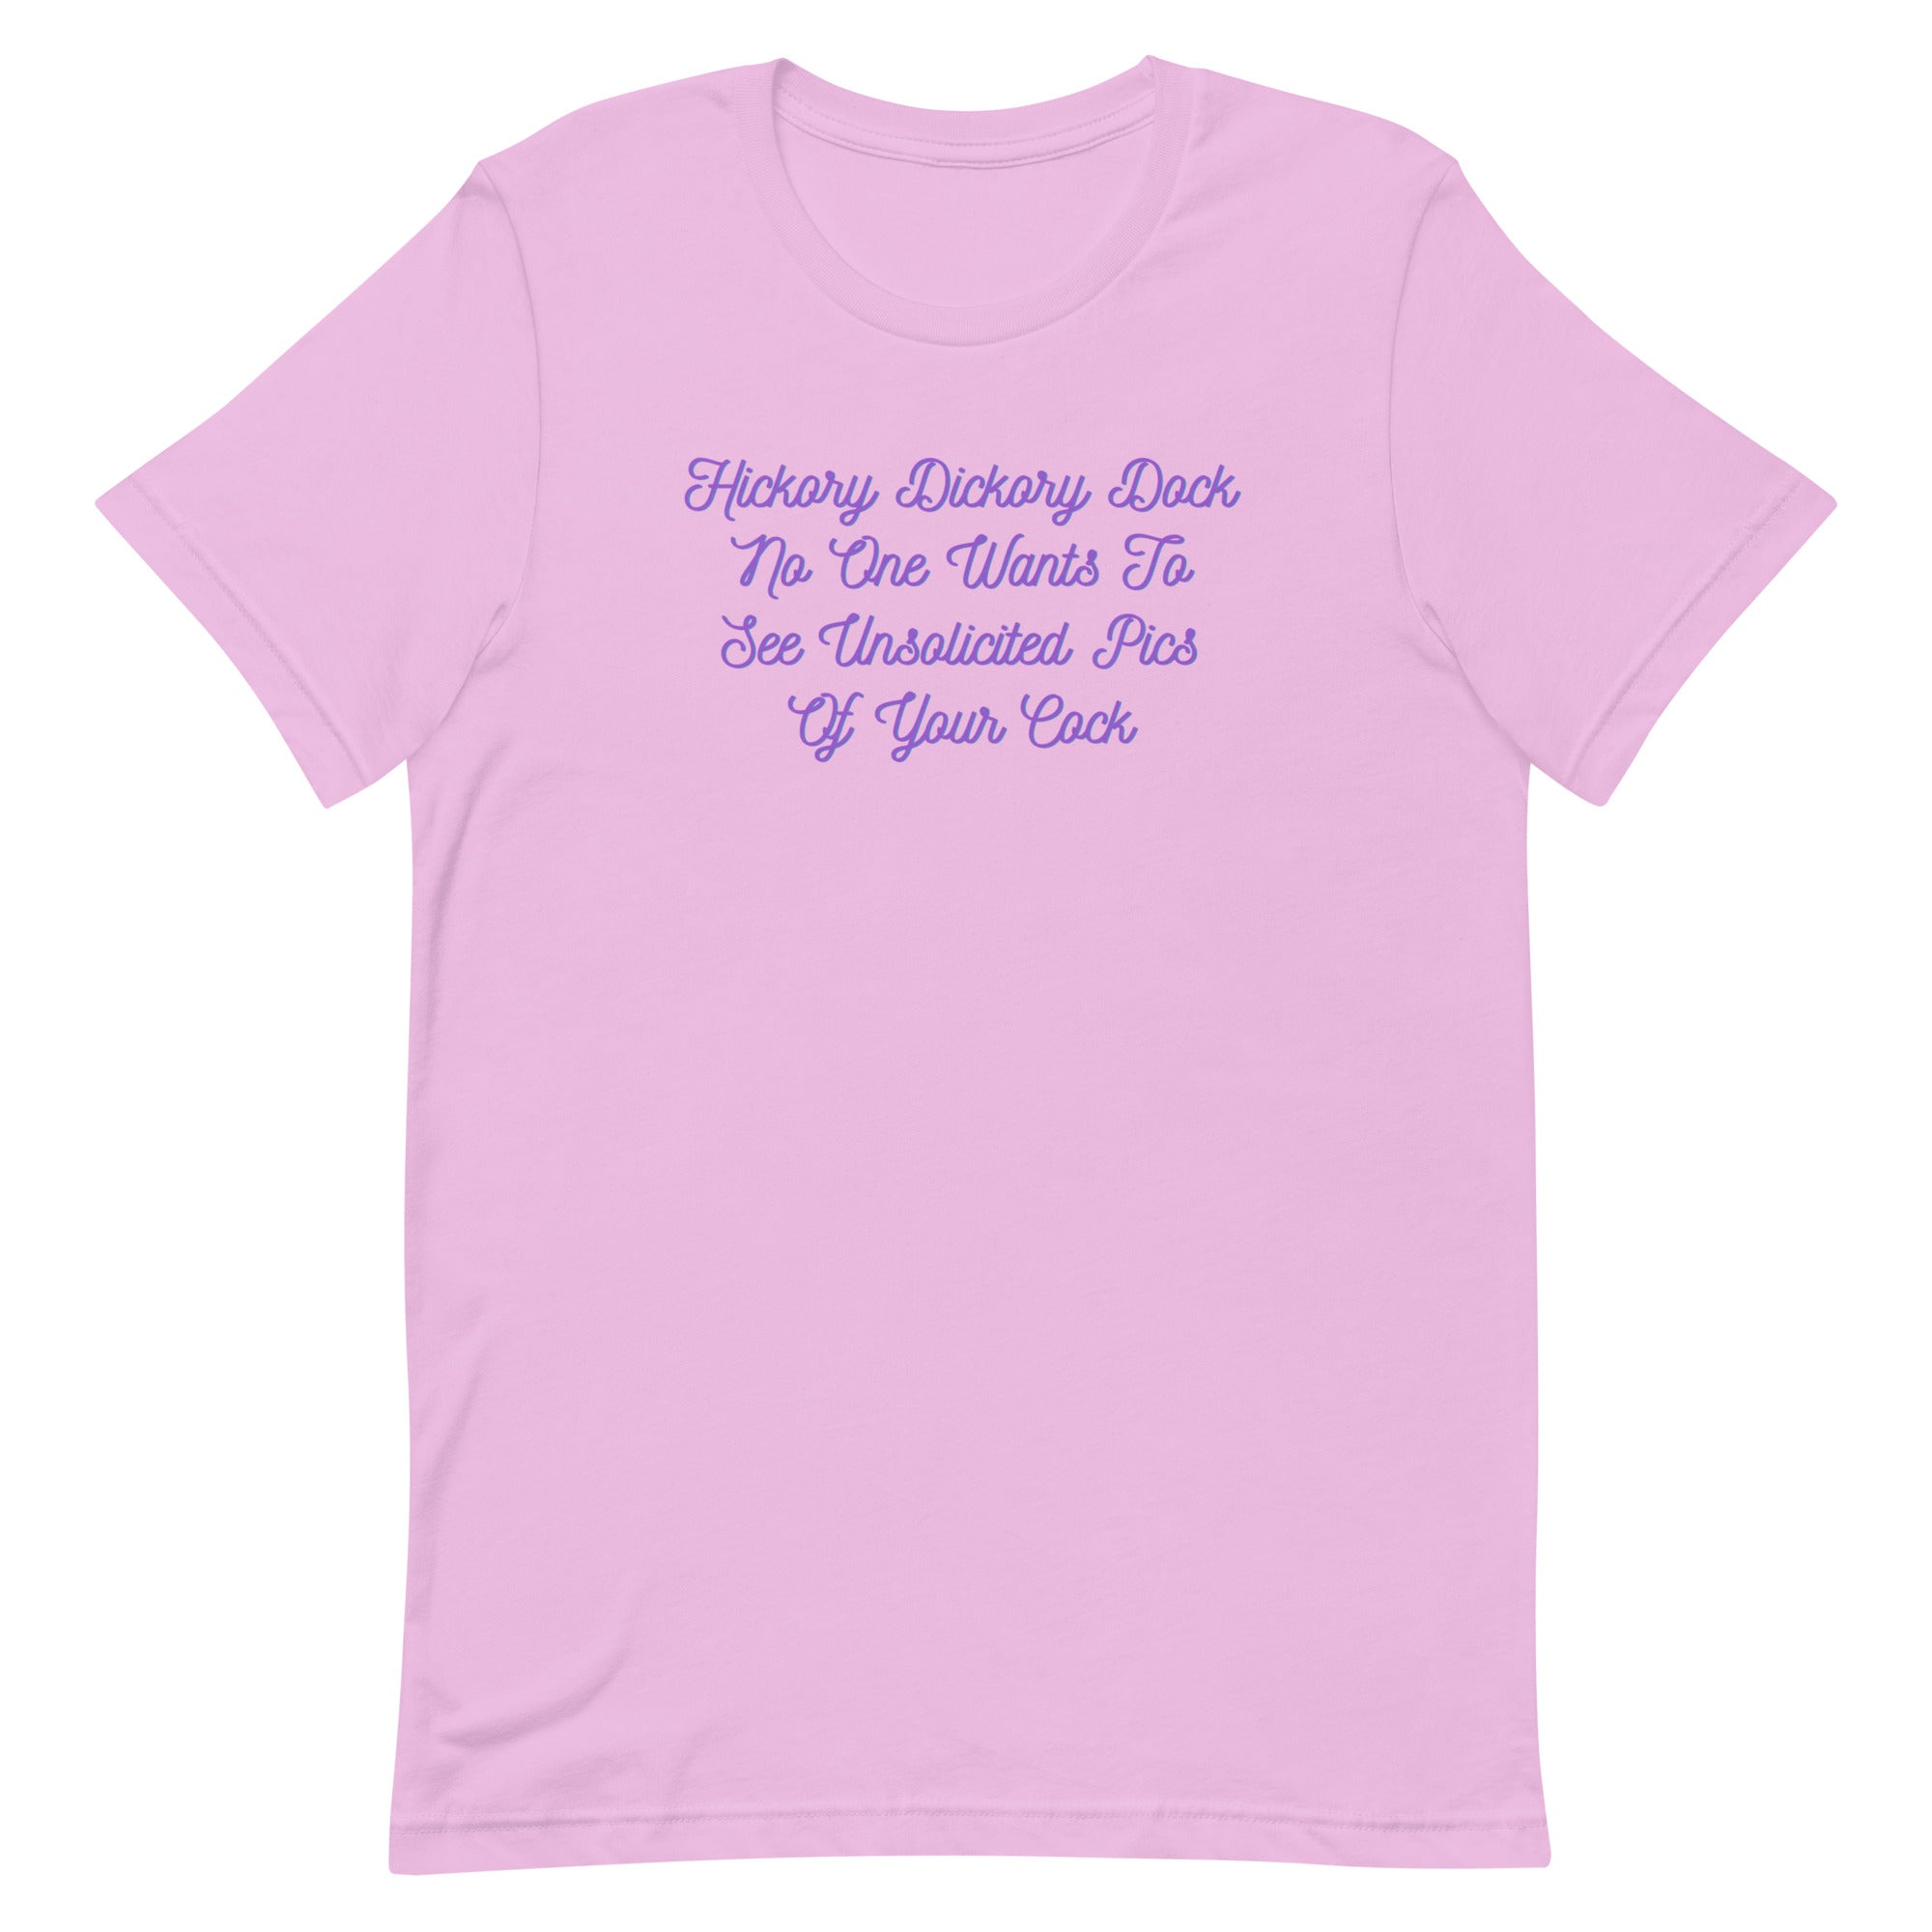 Hickory Dickory Dock Unisex Feminist T-shirt - Shop Women’s Rights T-shirts - Feminist Trash Store - Lilac 